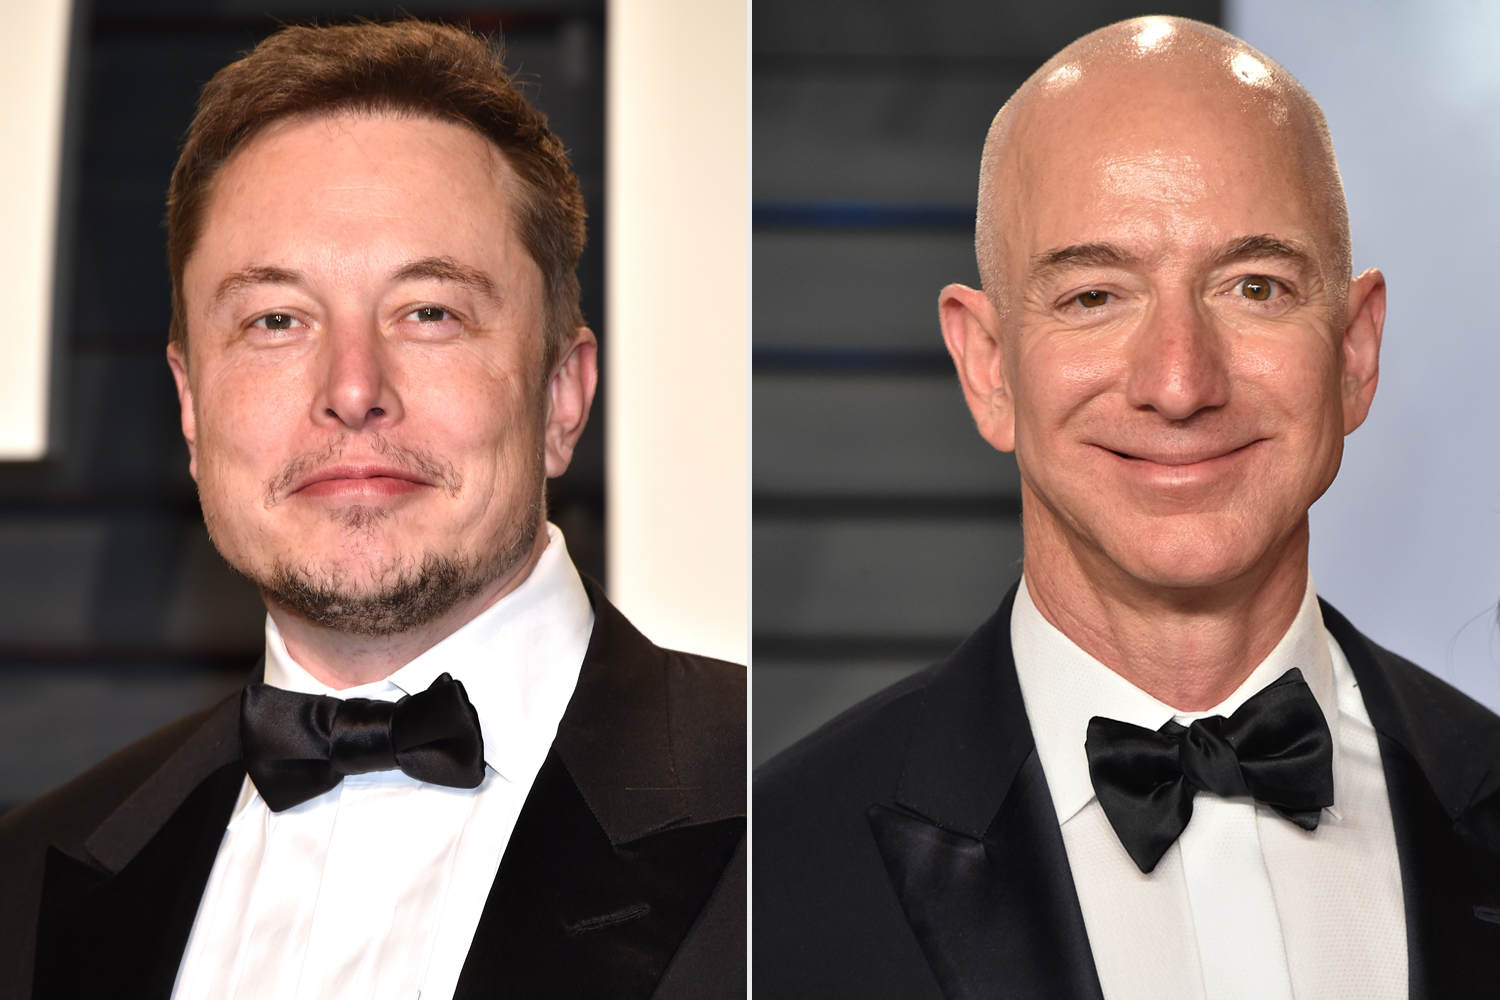 Elon Musk becomes world’s richest man, surpassing Amazon boss Jeff Bezos